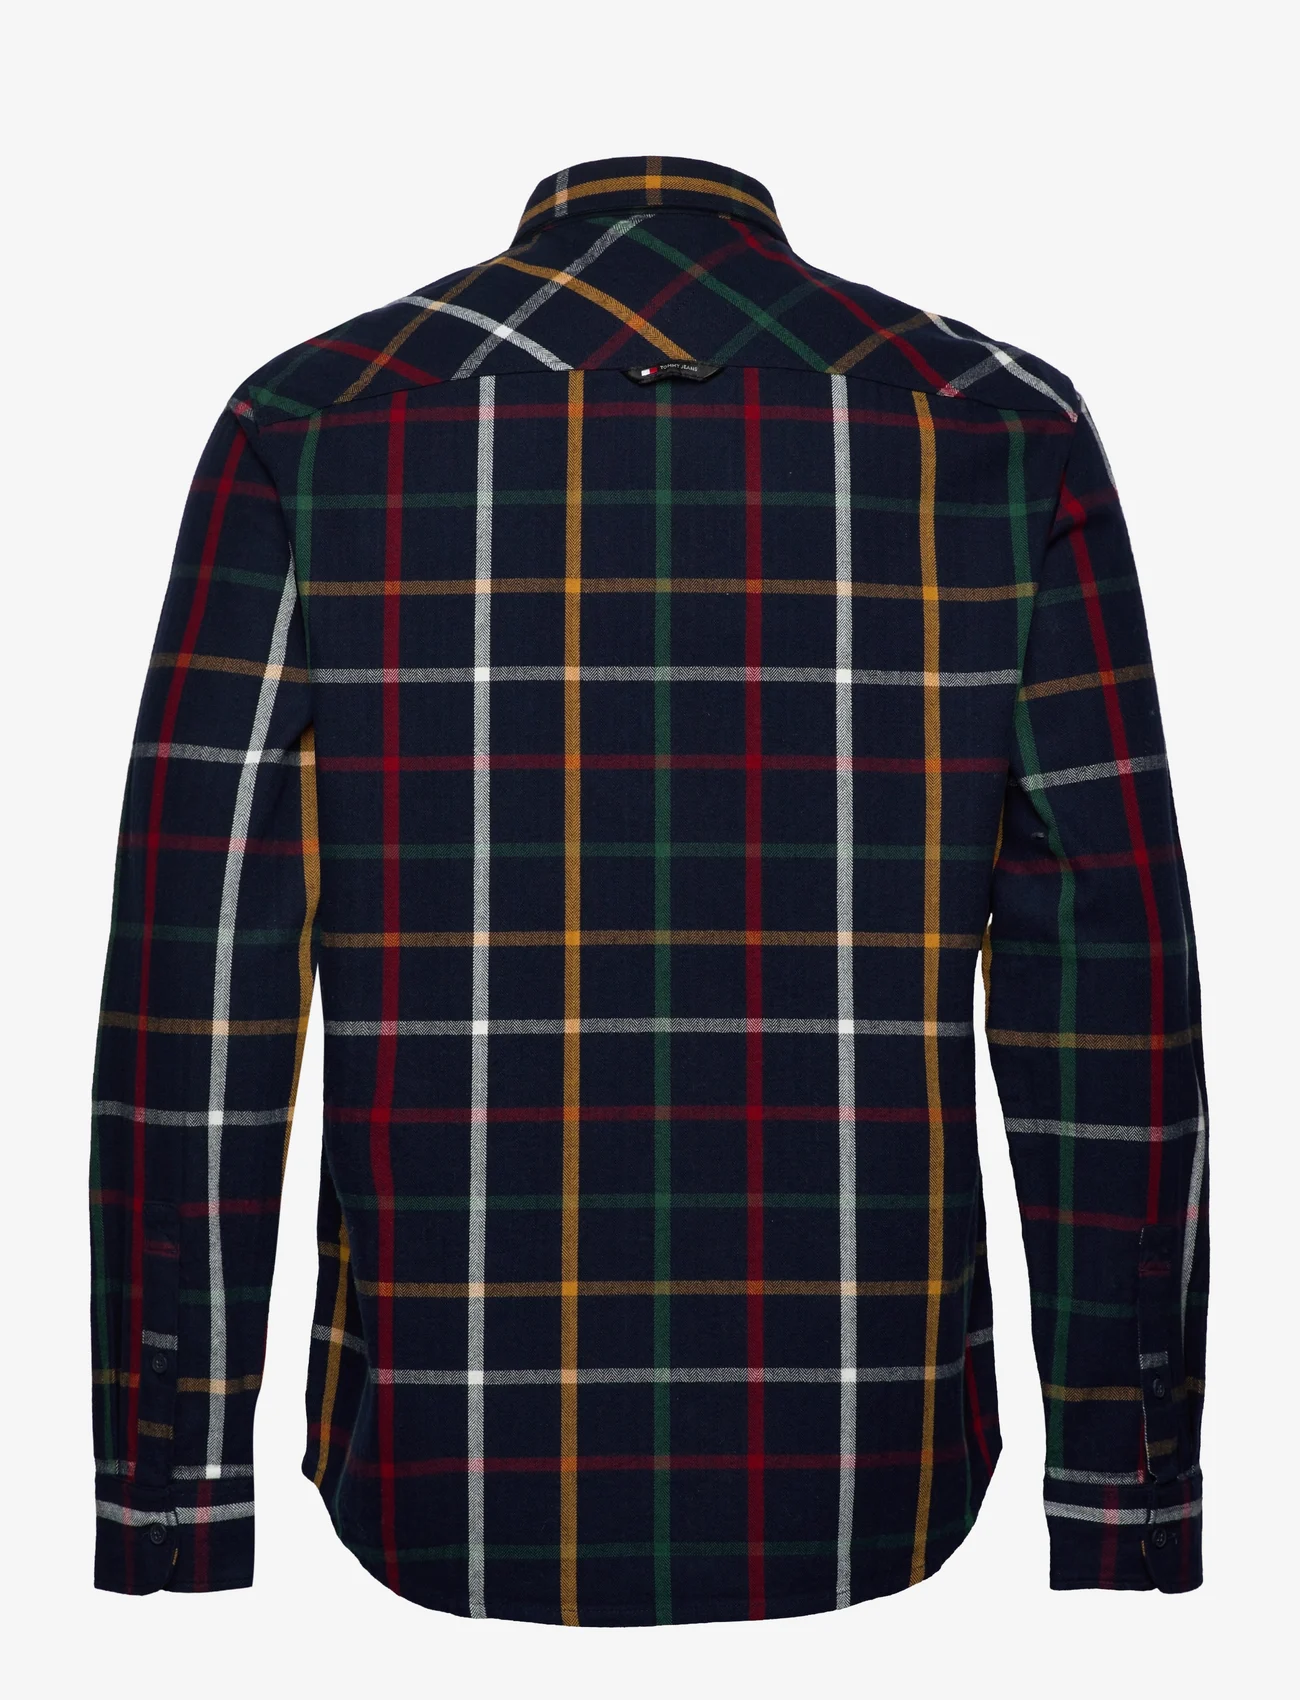 Tommy Jeans - TJM REG CHECK FLANNEL SHIRT - geruite overhemden - dark night navy check - 1